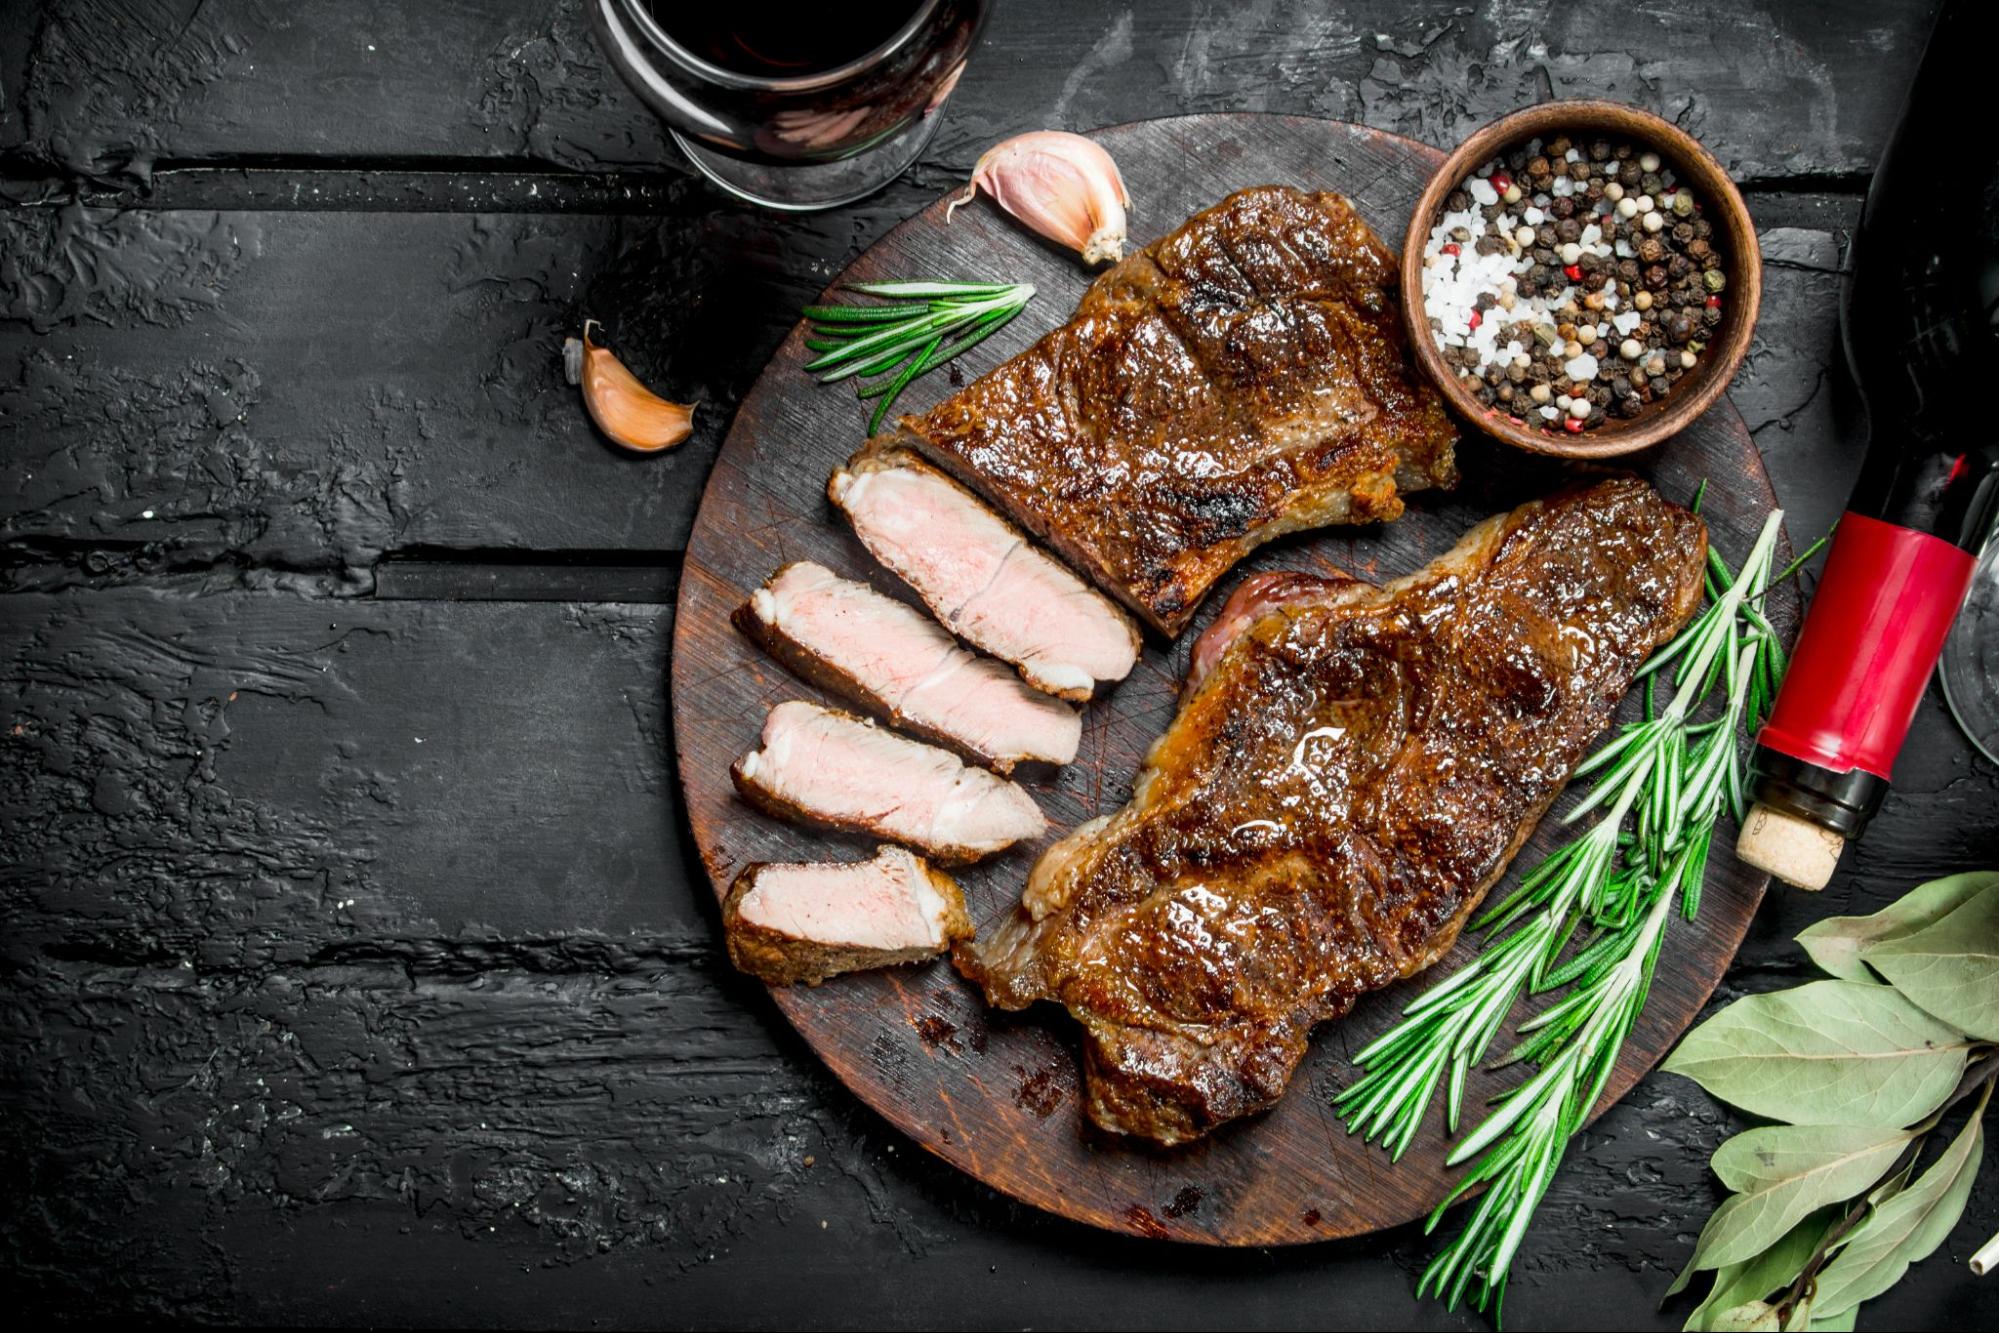 Steak is a classic Cabernet Sauvignon pairing